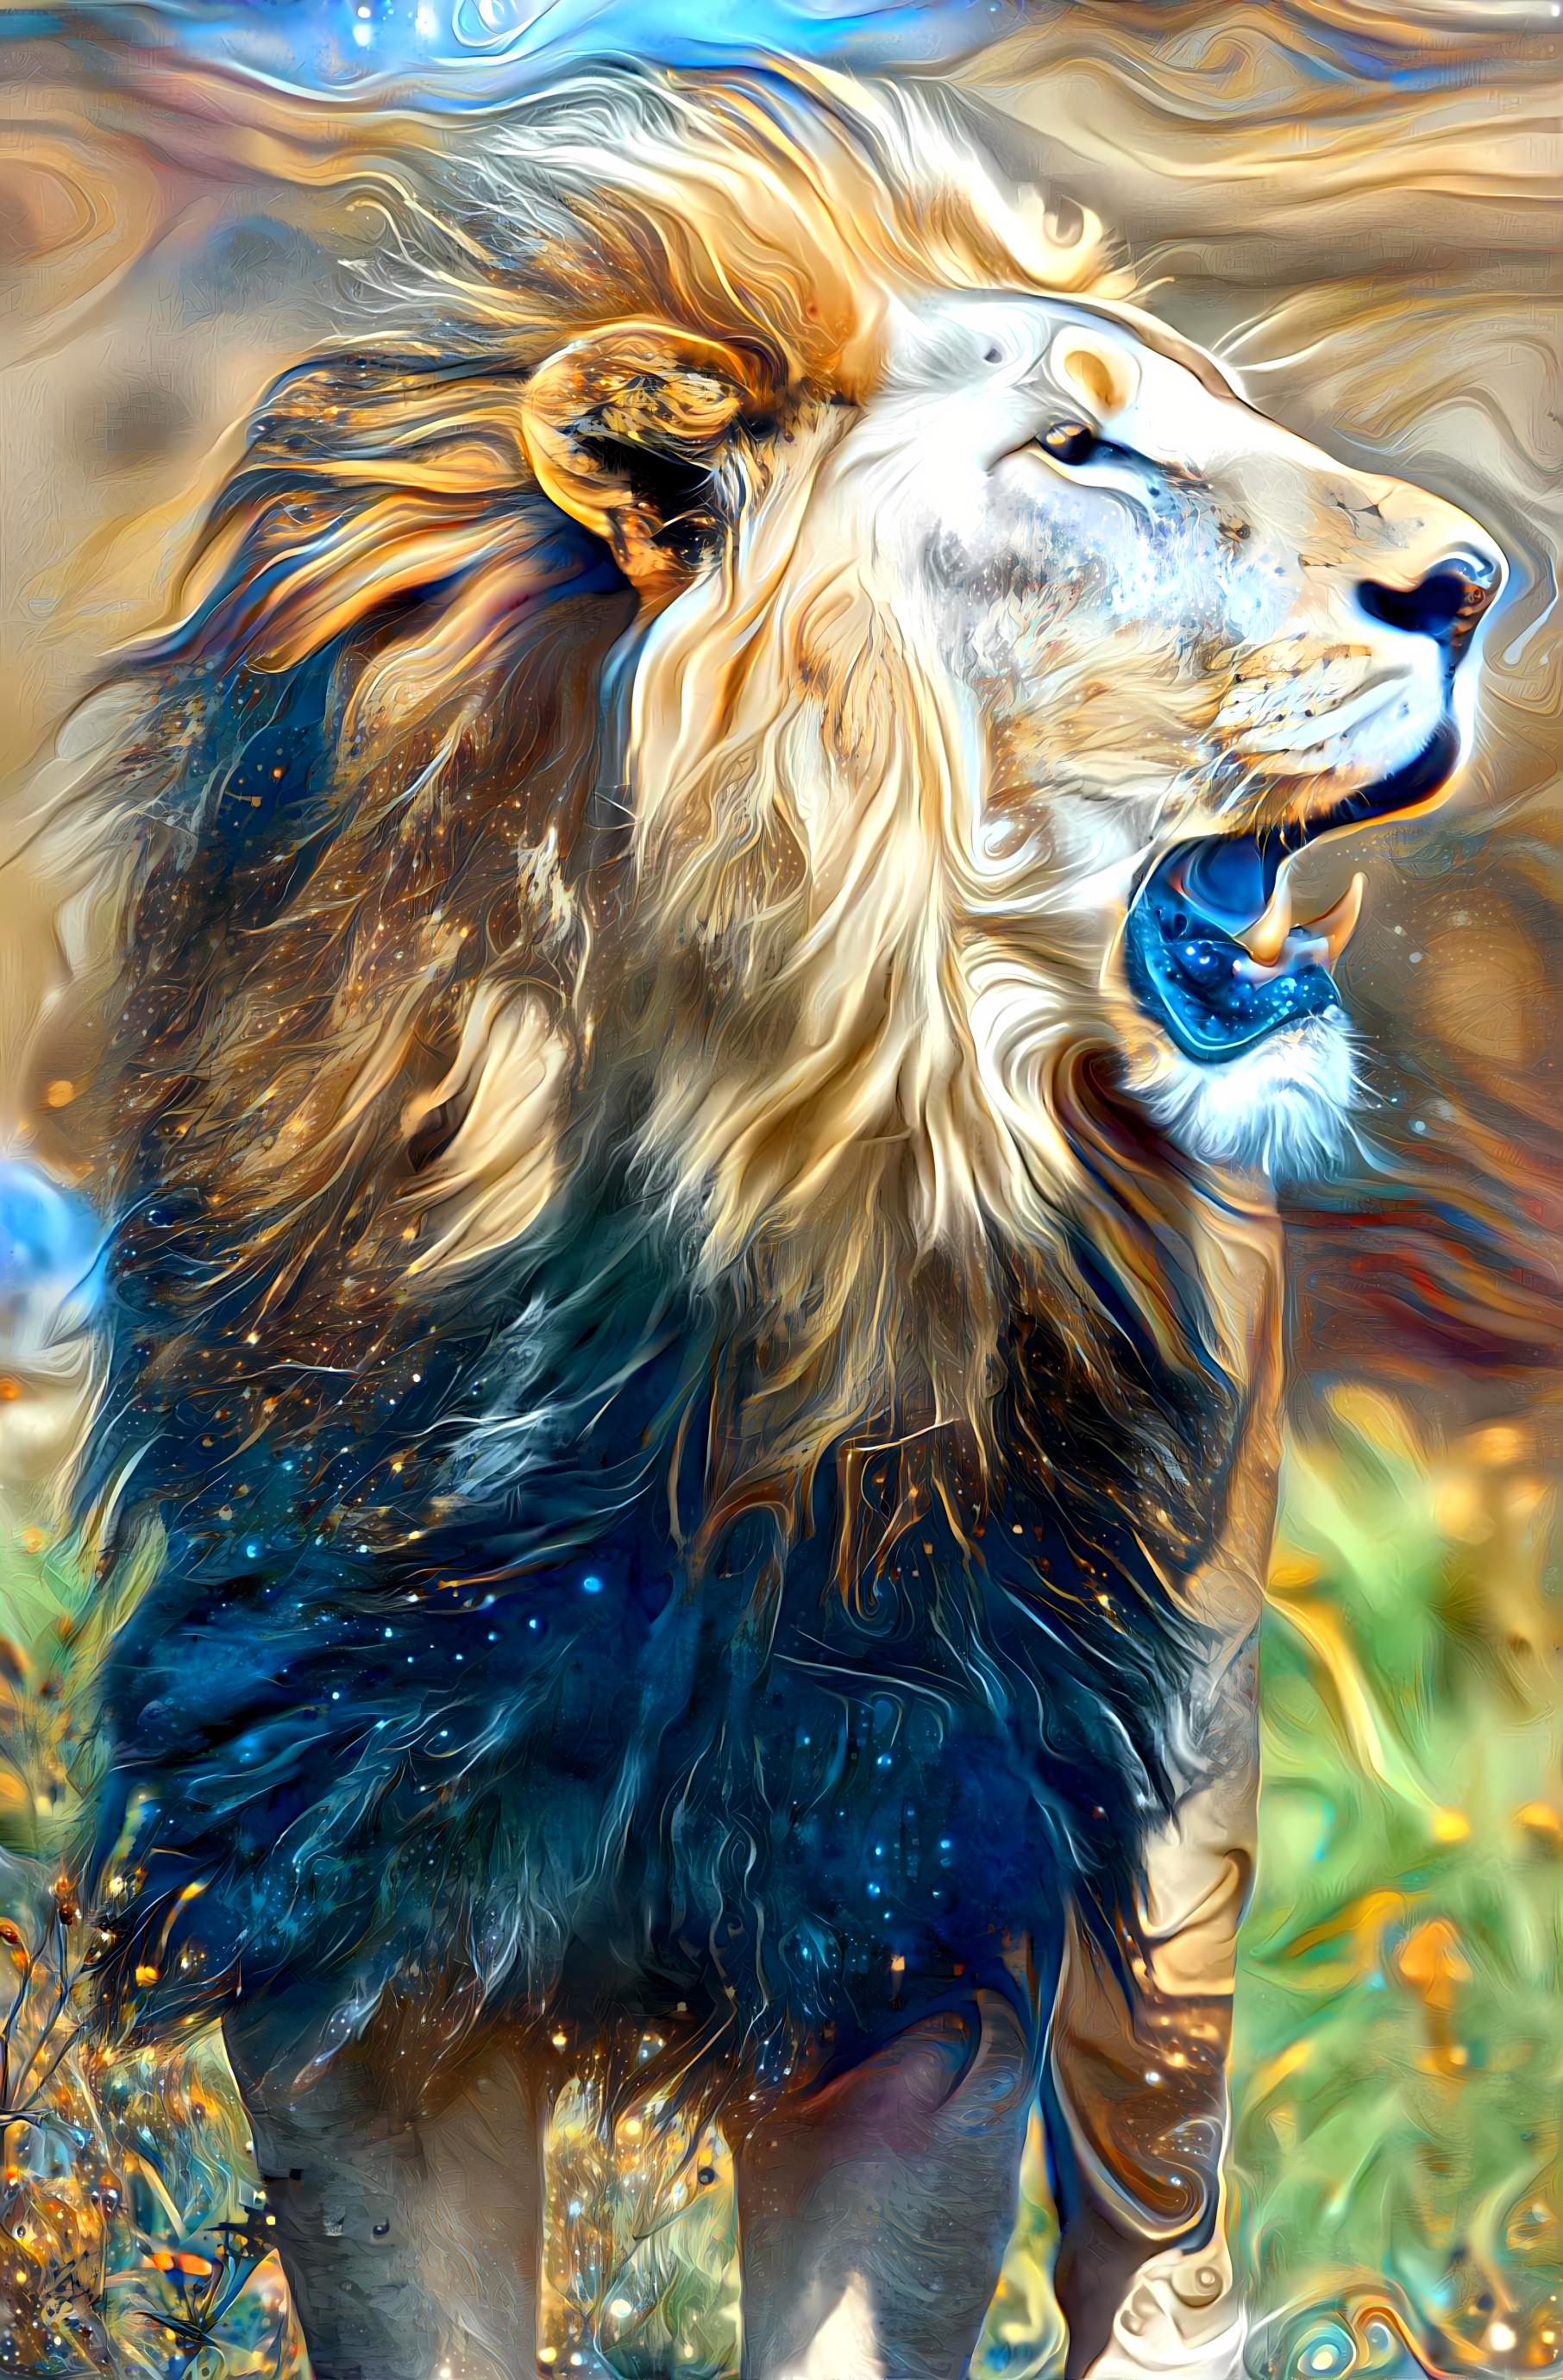 Dream Lion 9